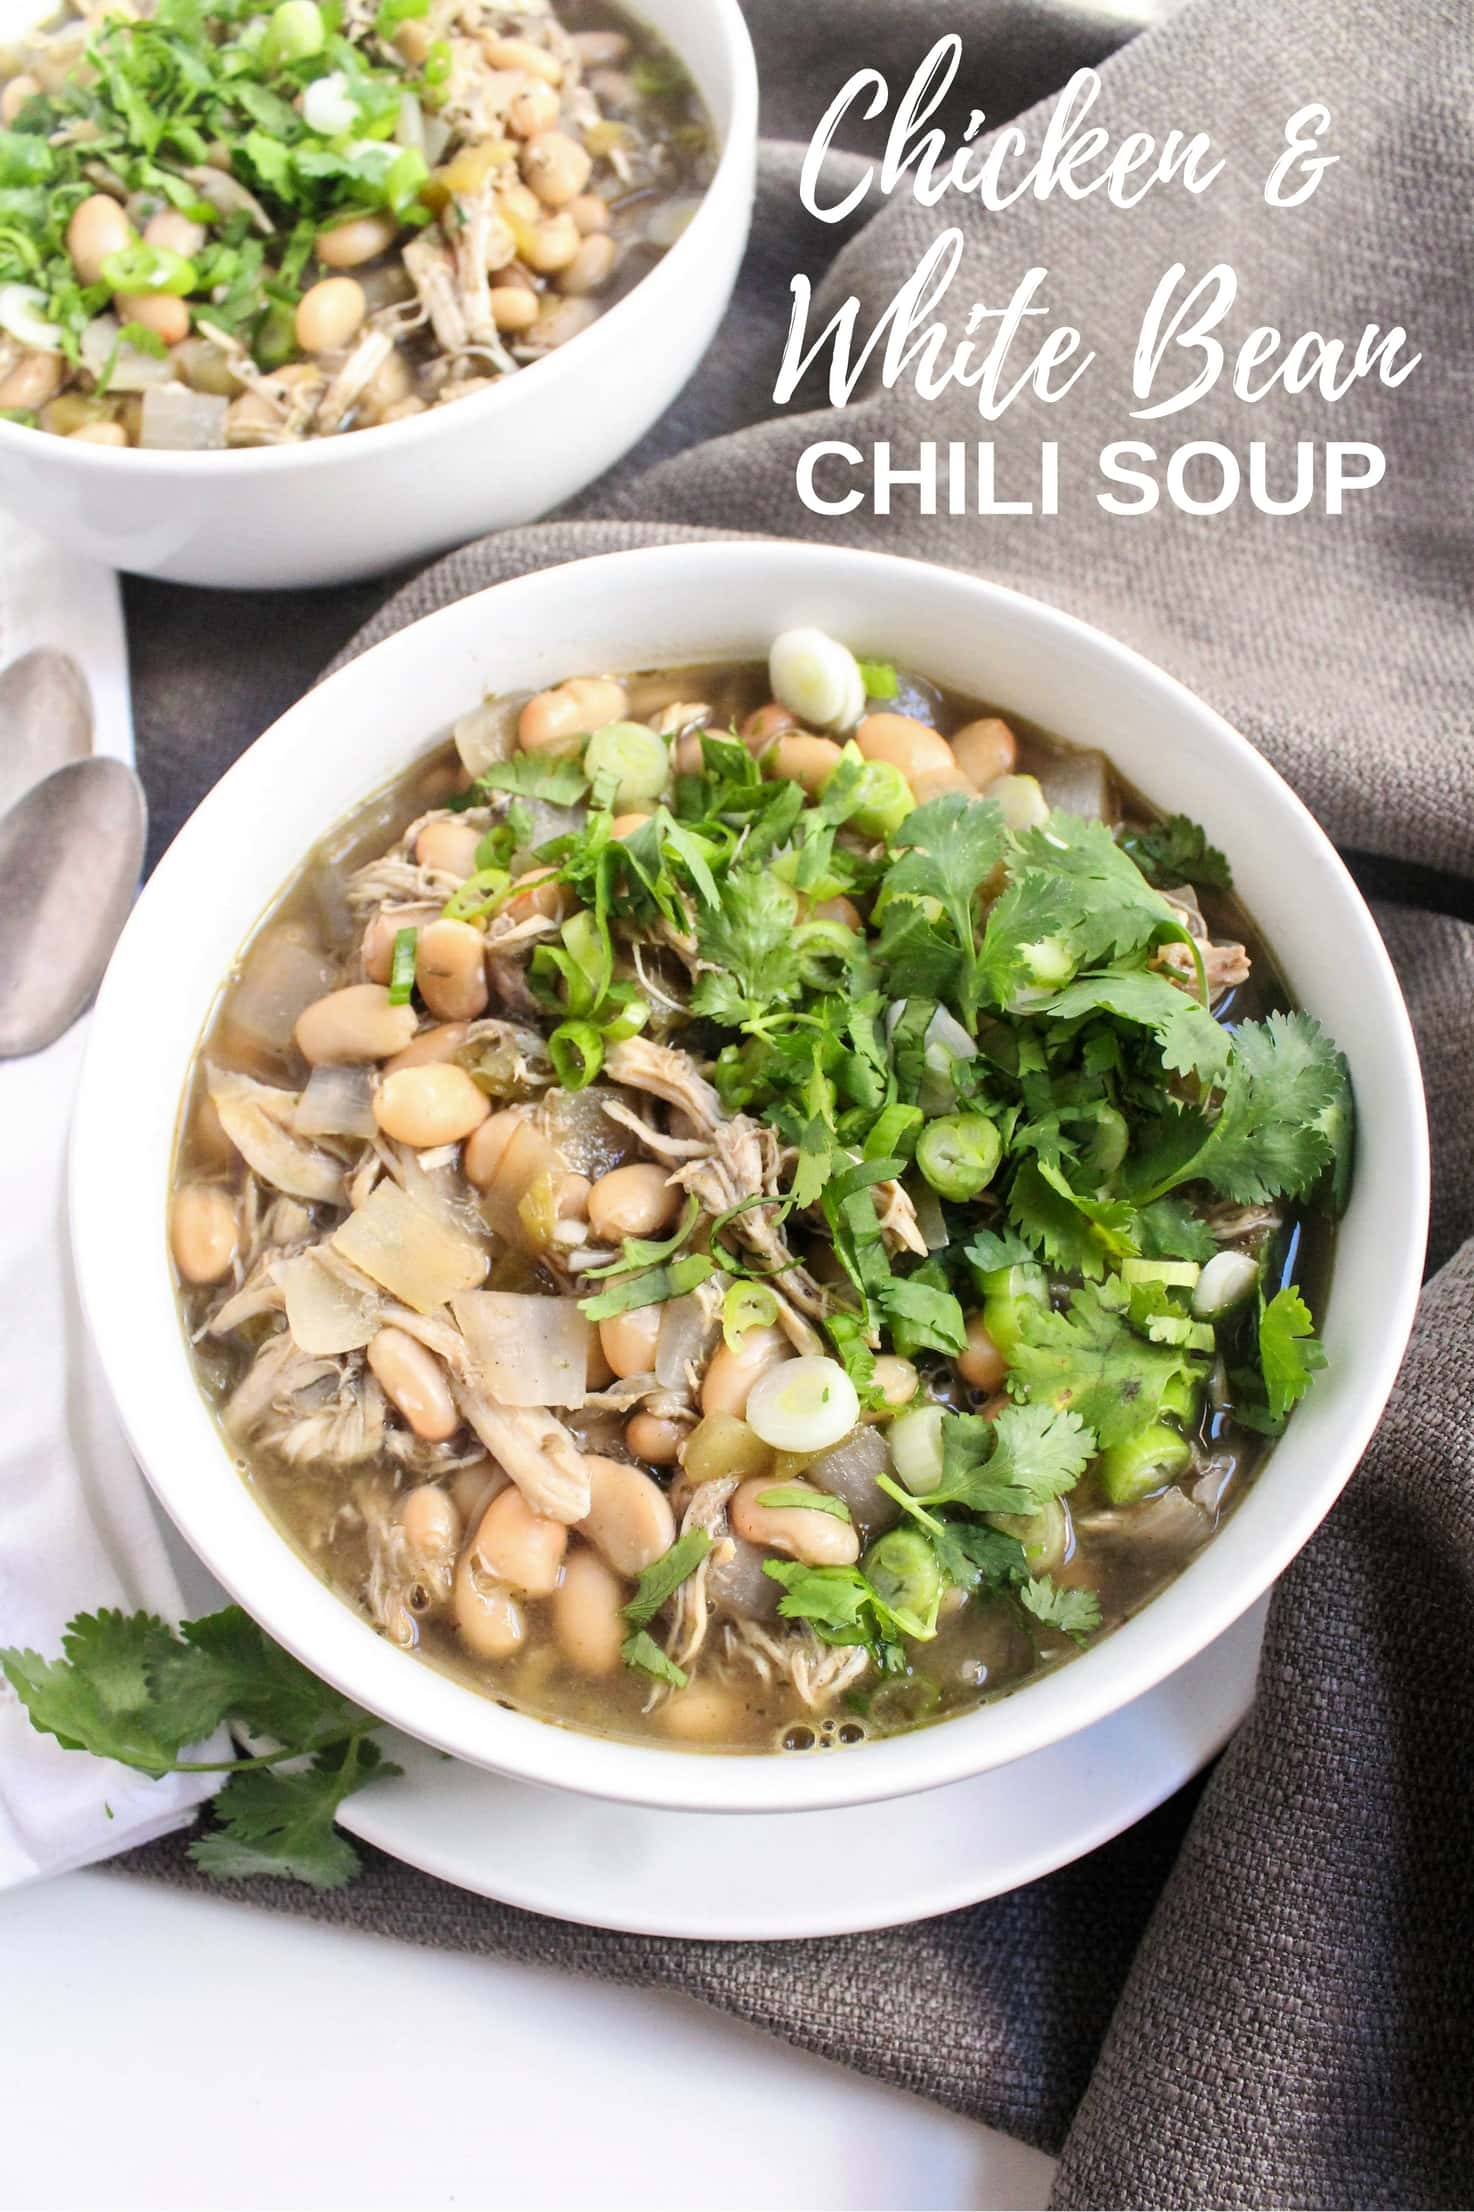 Chicken & White Bean Chili Soup Recipe | Healthy, Fast, Easy